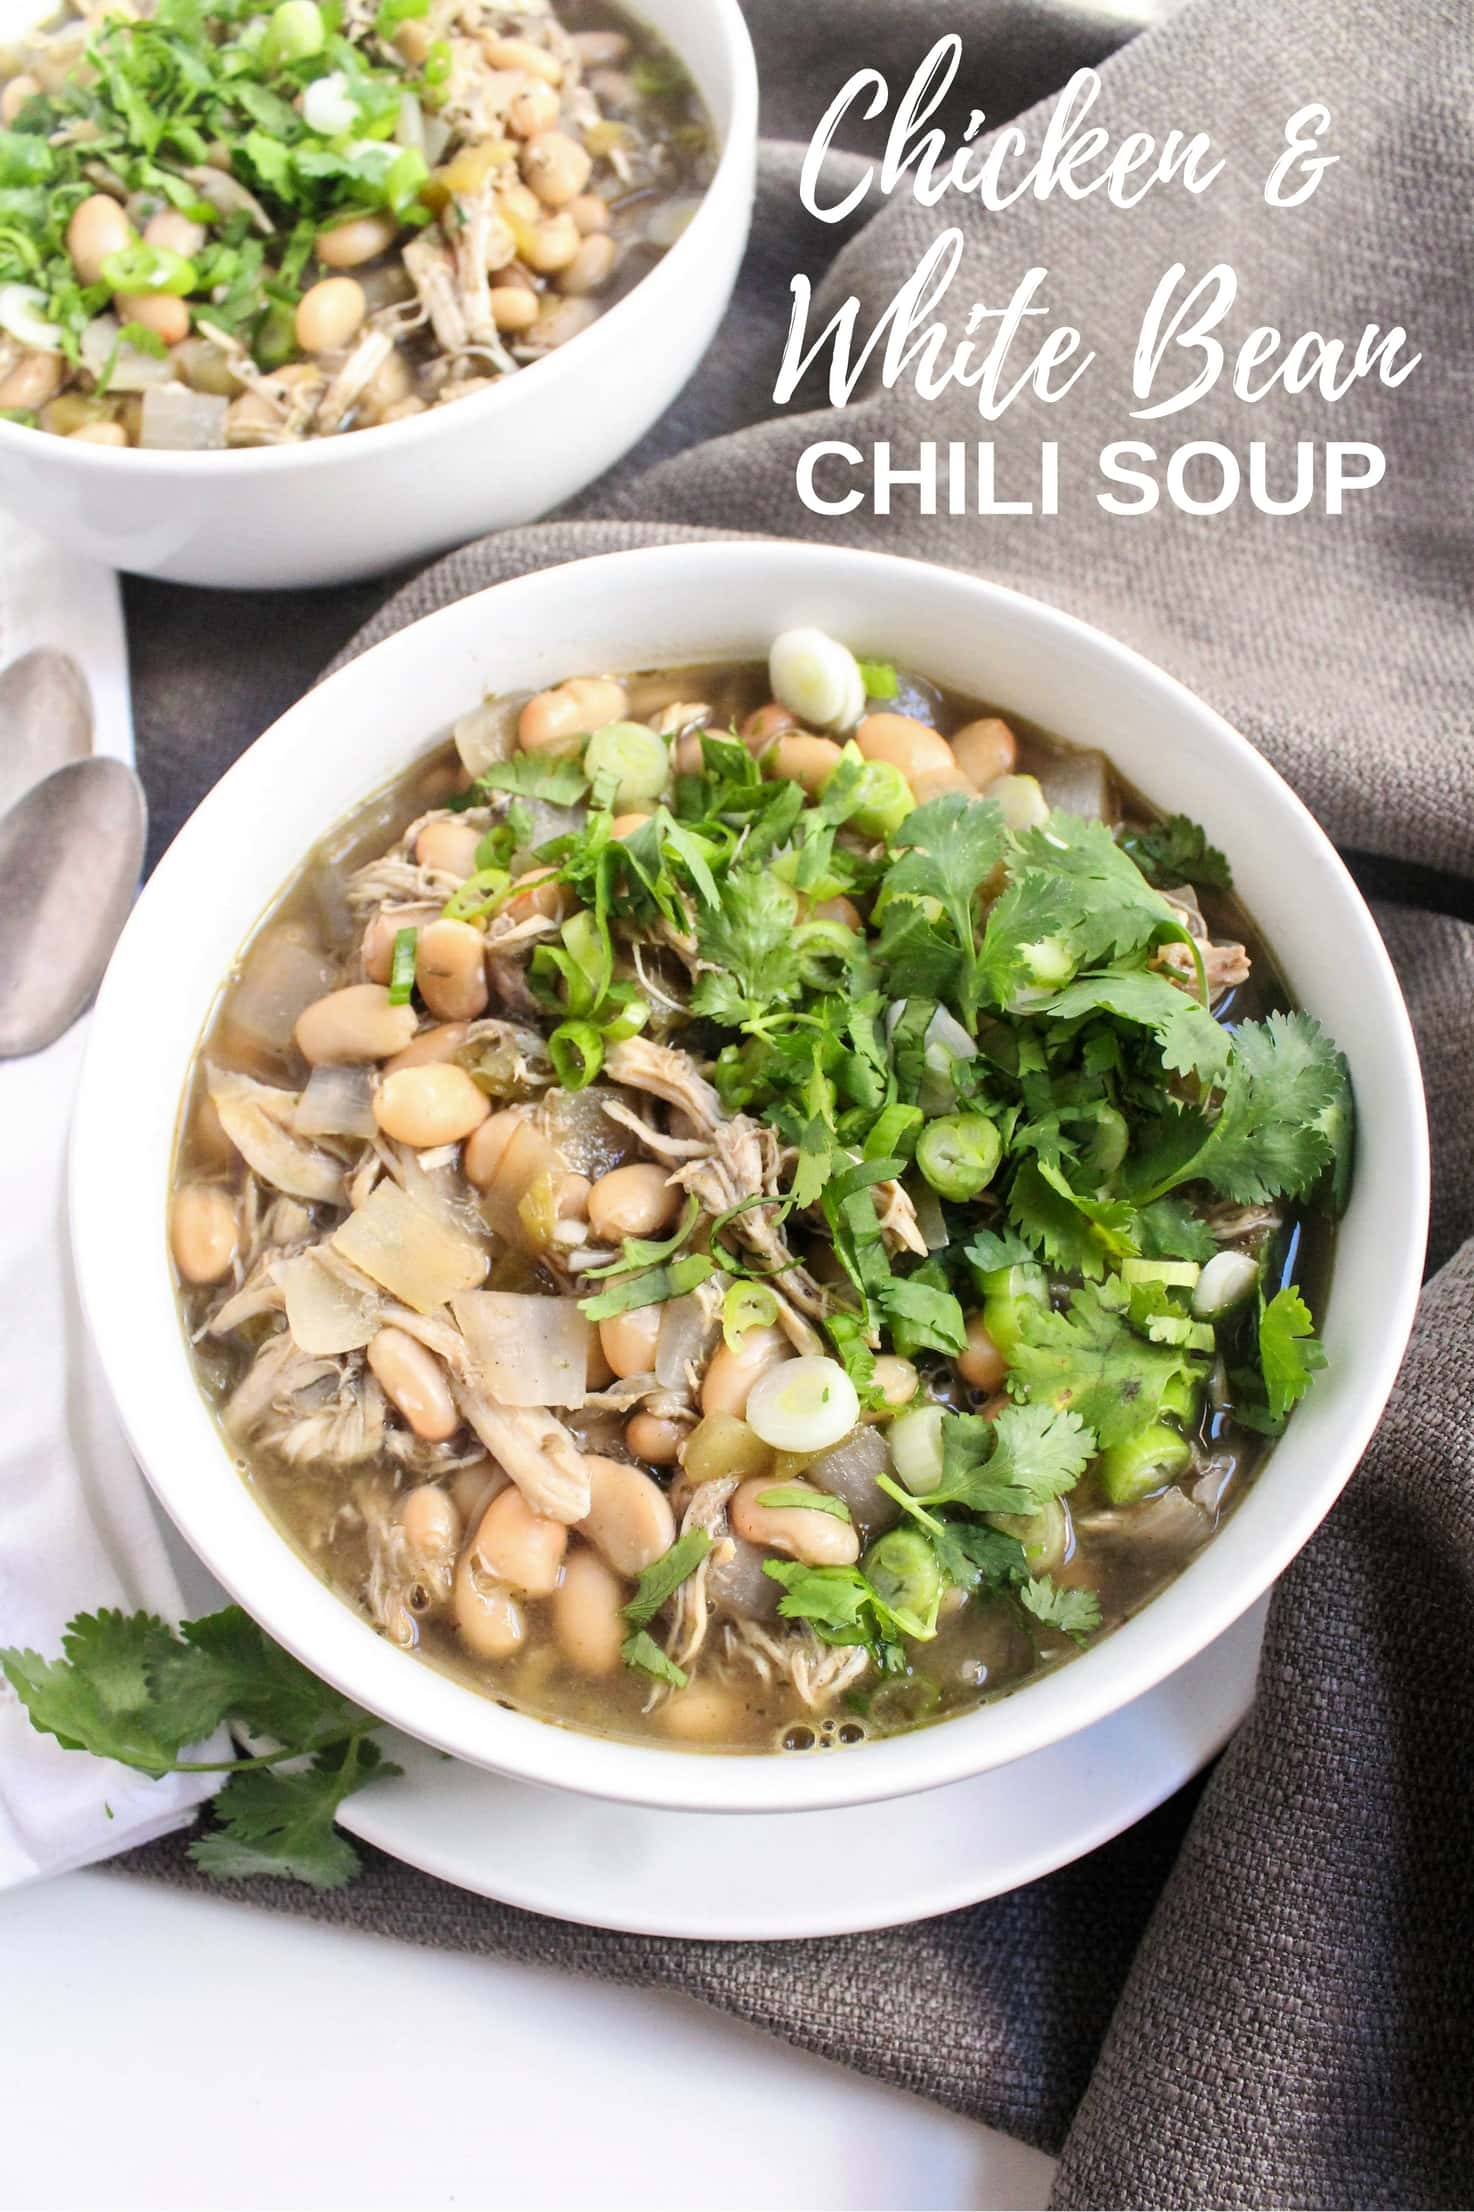 Chicken & White Bean Chili Soup Recipe | Healthy, Fast, Easy